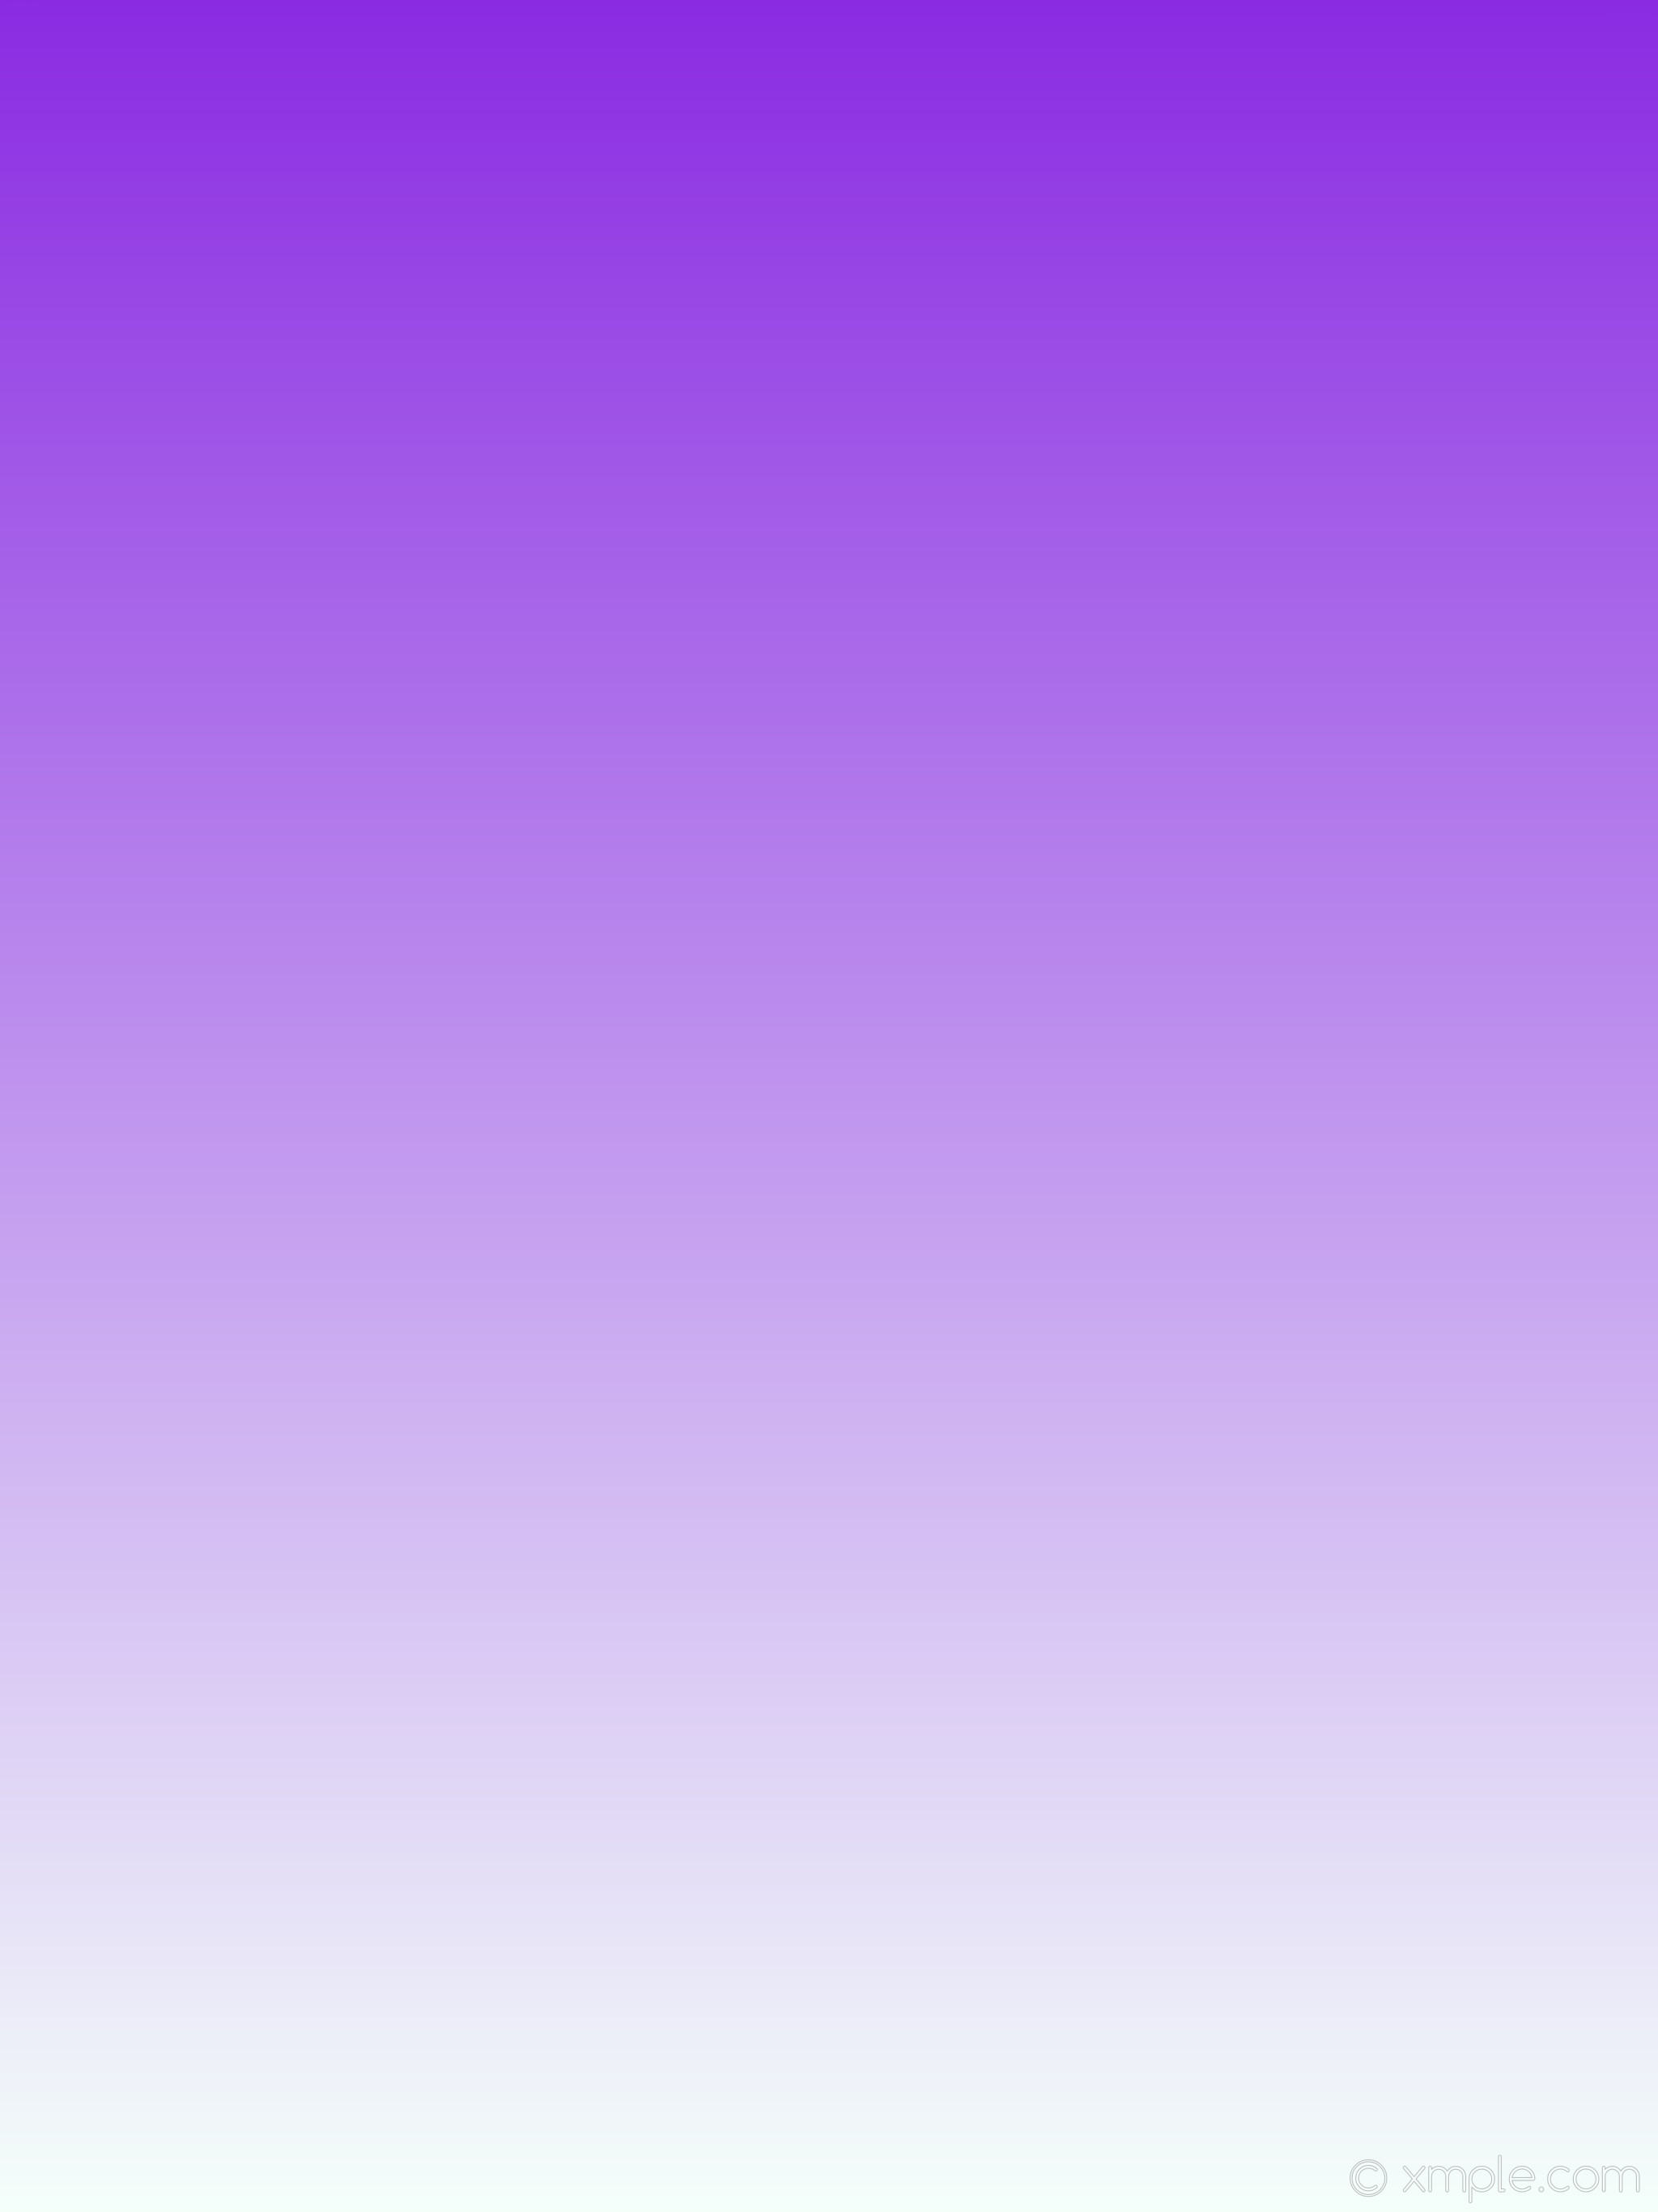 2048x2732 wallpaper gradient white linear purple blue violet mint cream #8a2be2  #f5fffa 90Â°